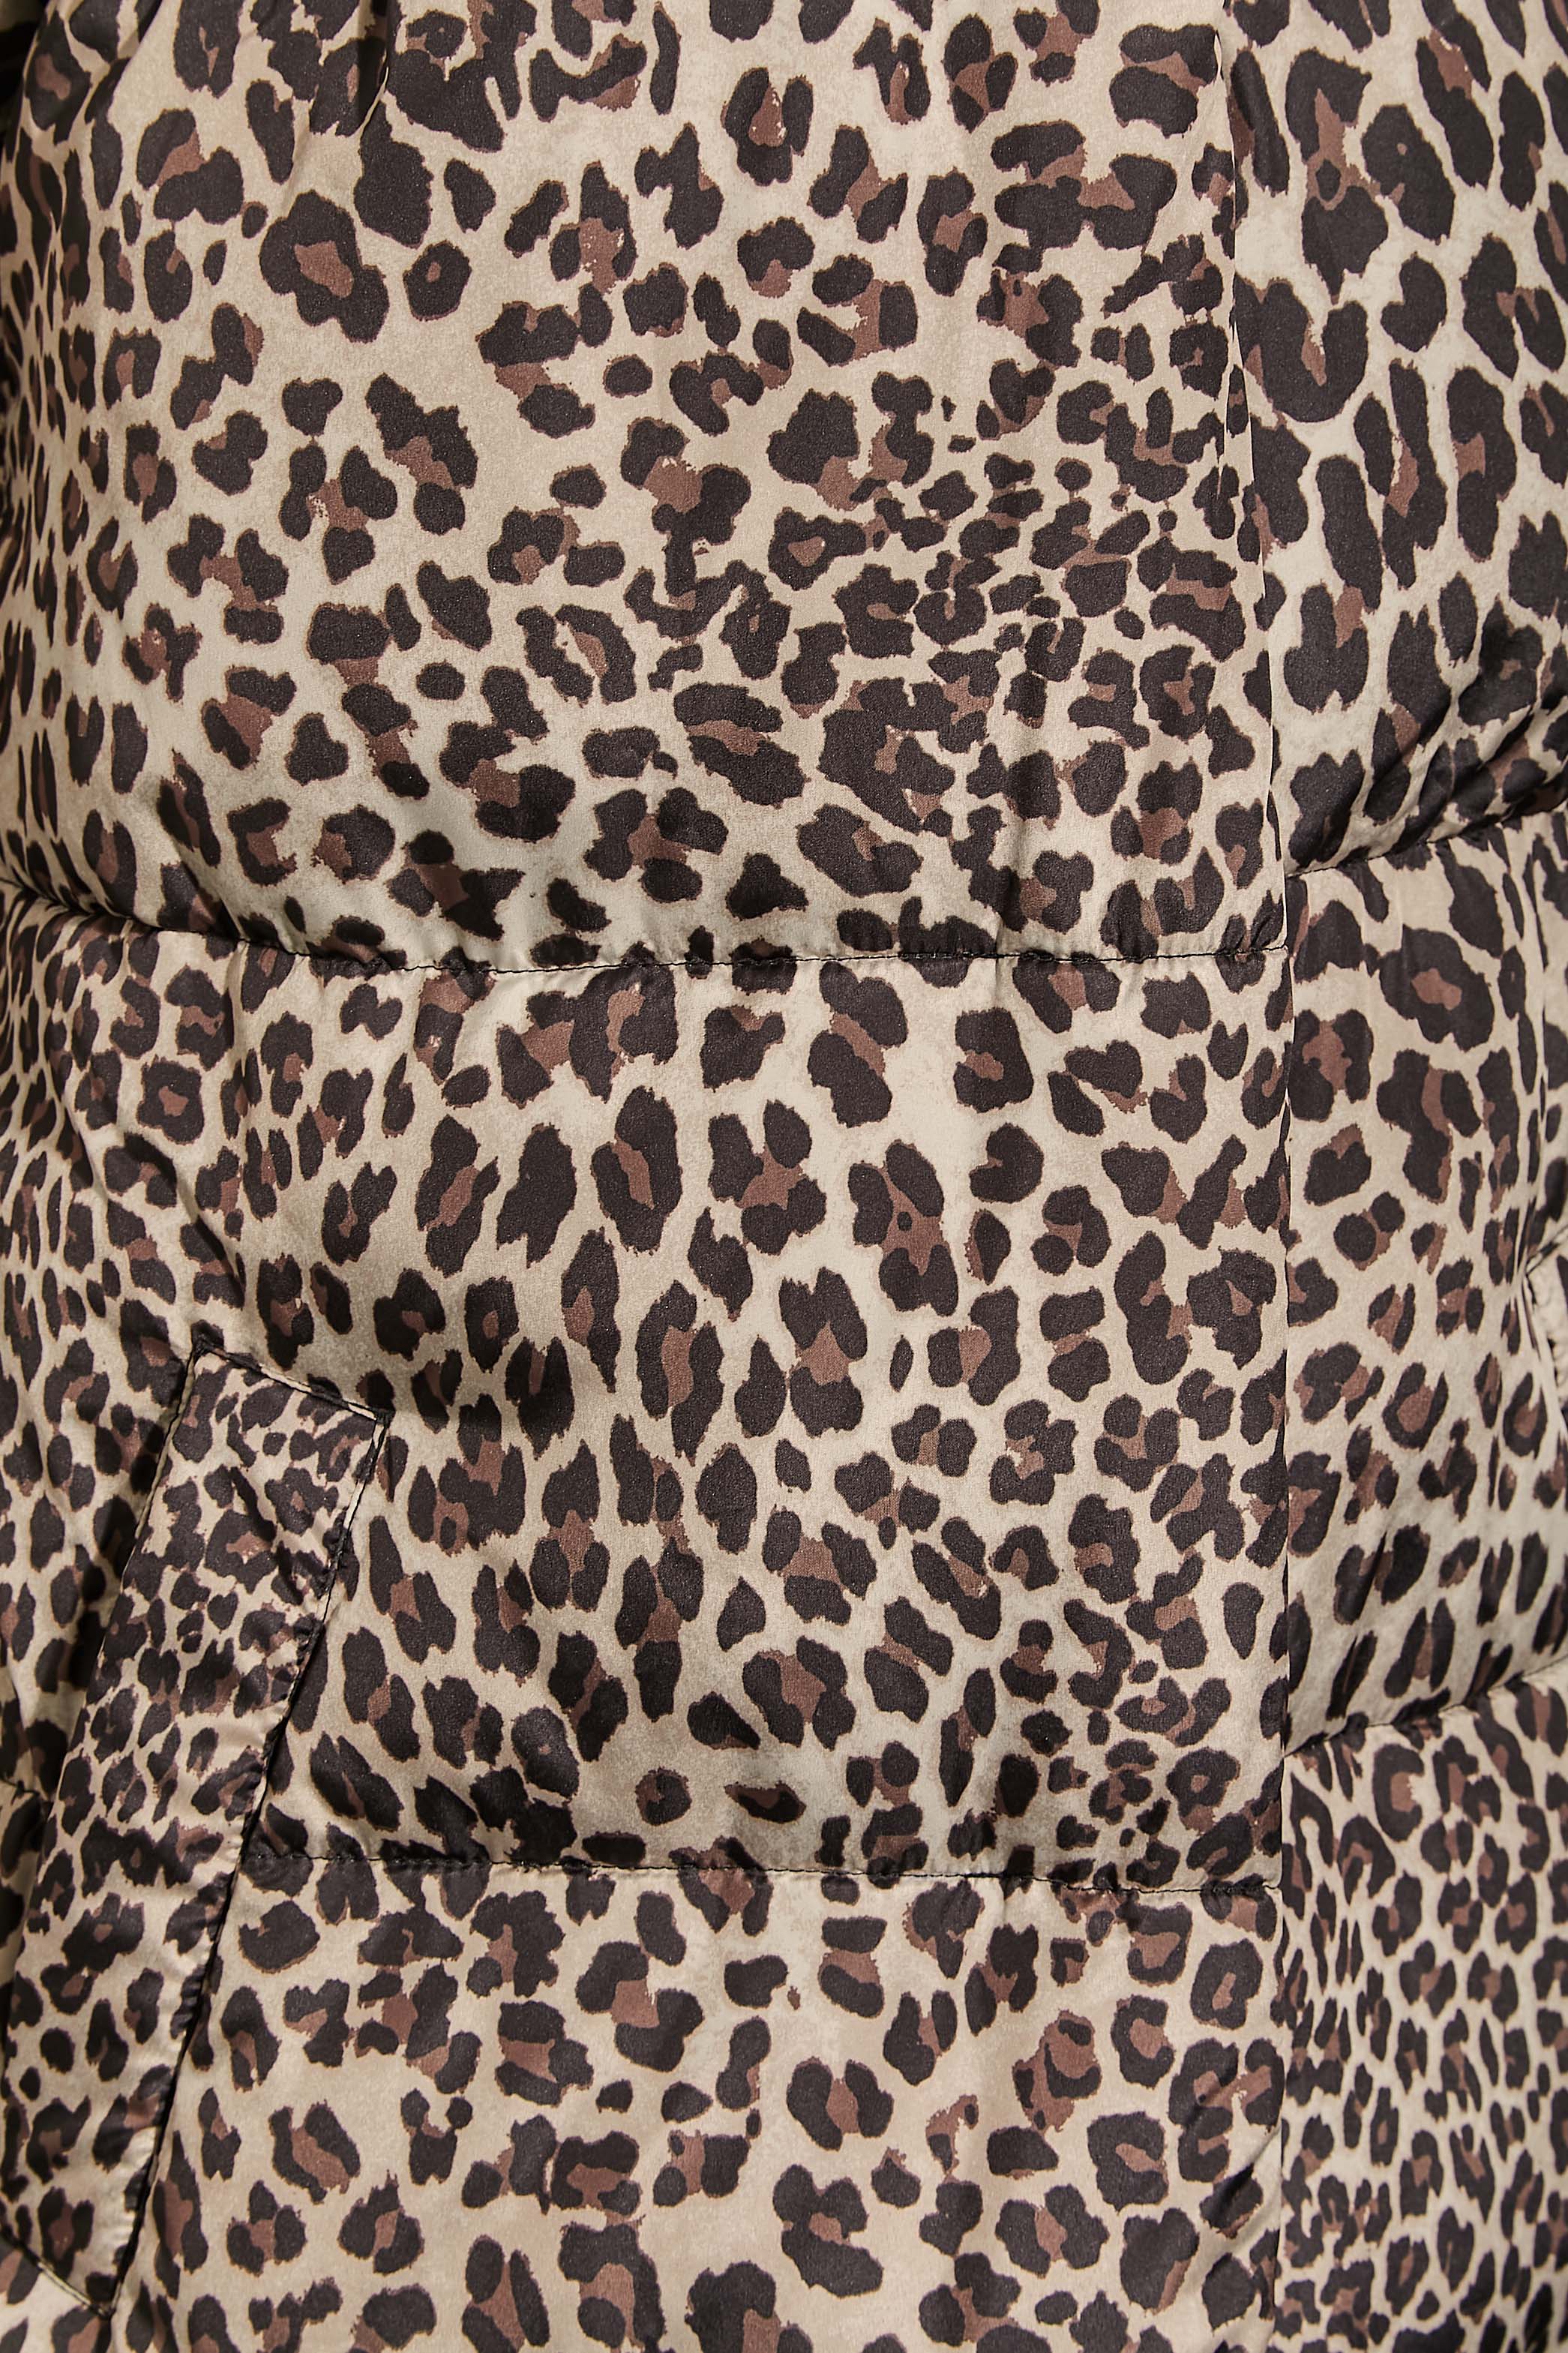 LTS Tall Womens Beige Brown Animal Print Longline Puffer Coat | Long Tall Sally 1